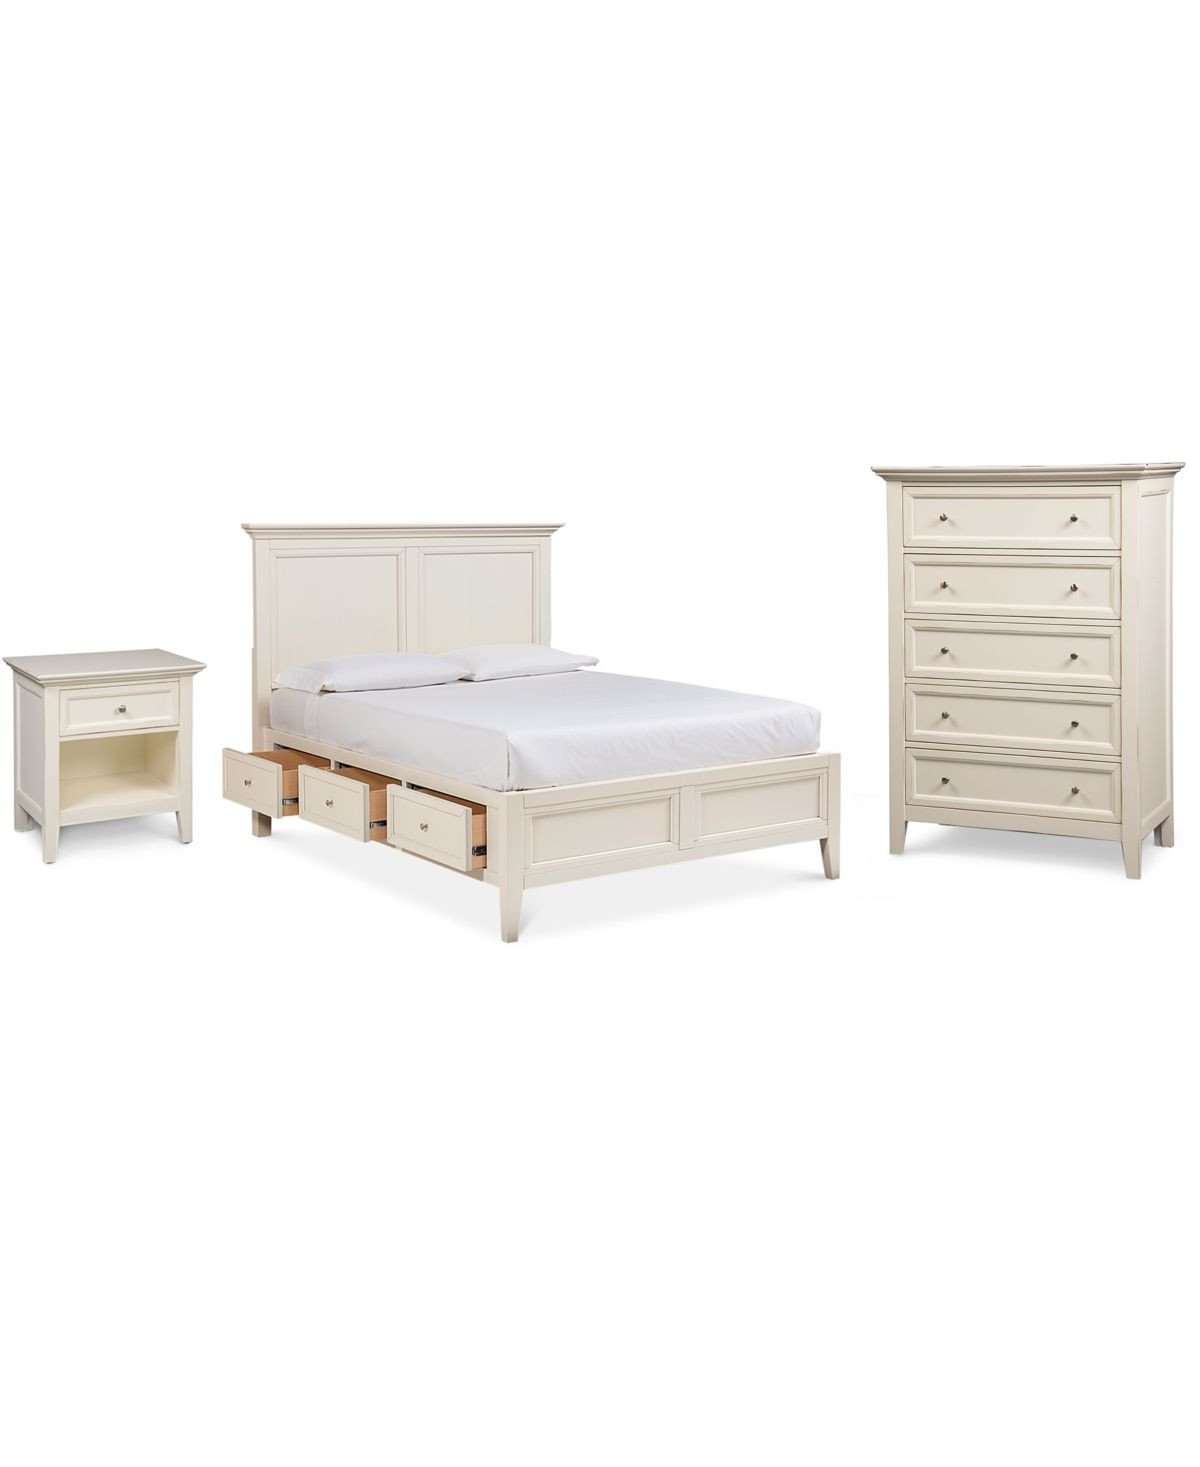 Queen Bedroom Set with Storage Drawers Best Of Sanibel Storage Bedroom Furniture 3 Pc Set Queen Bed